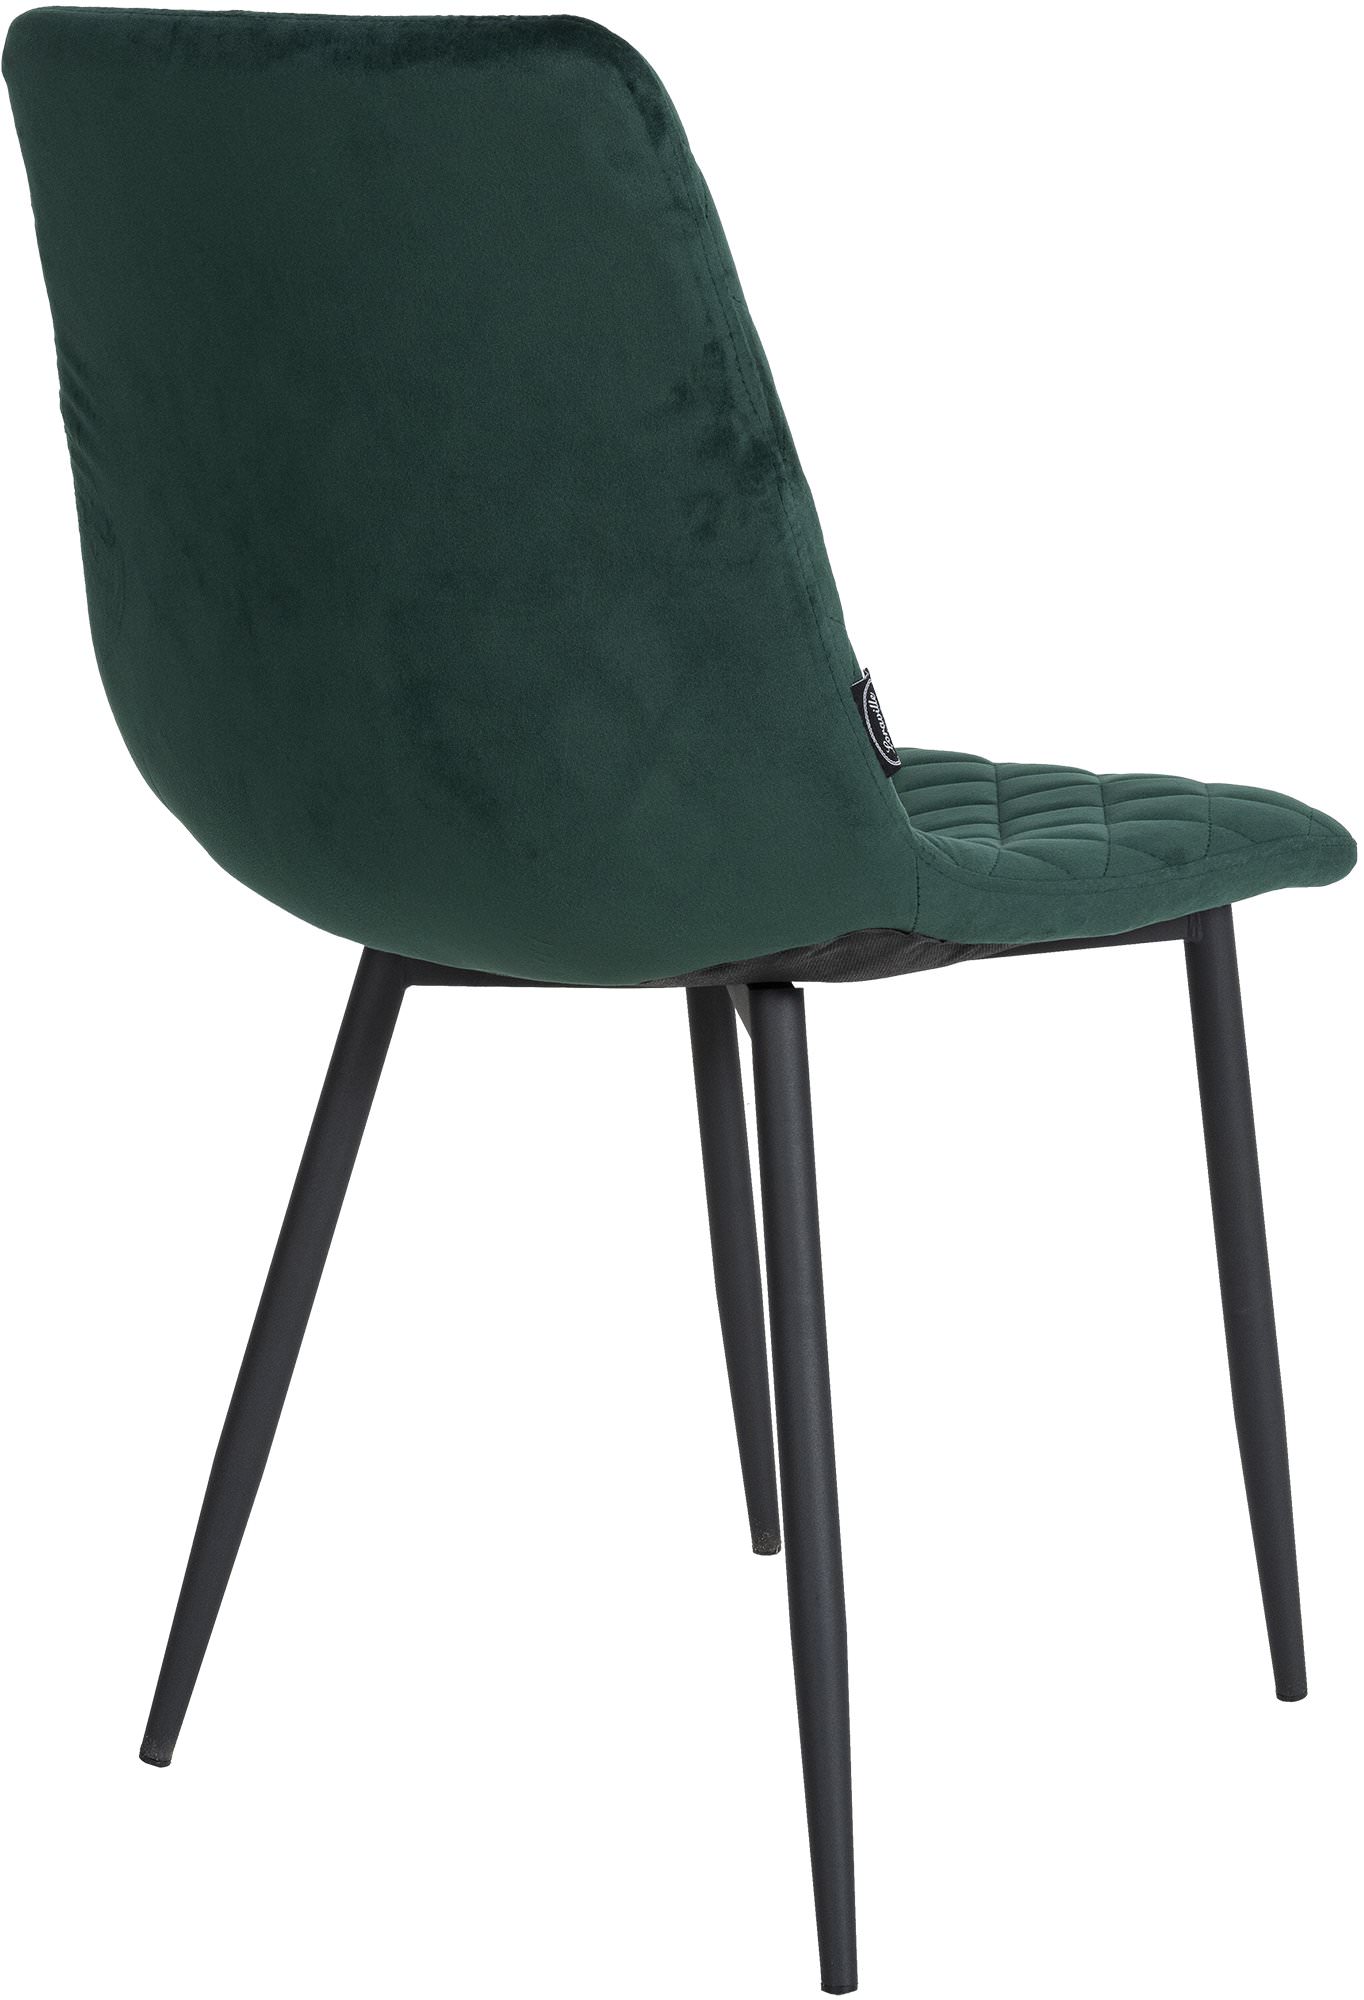 4er Set Stühle Telde Samt dunkelgrün